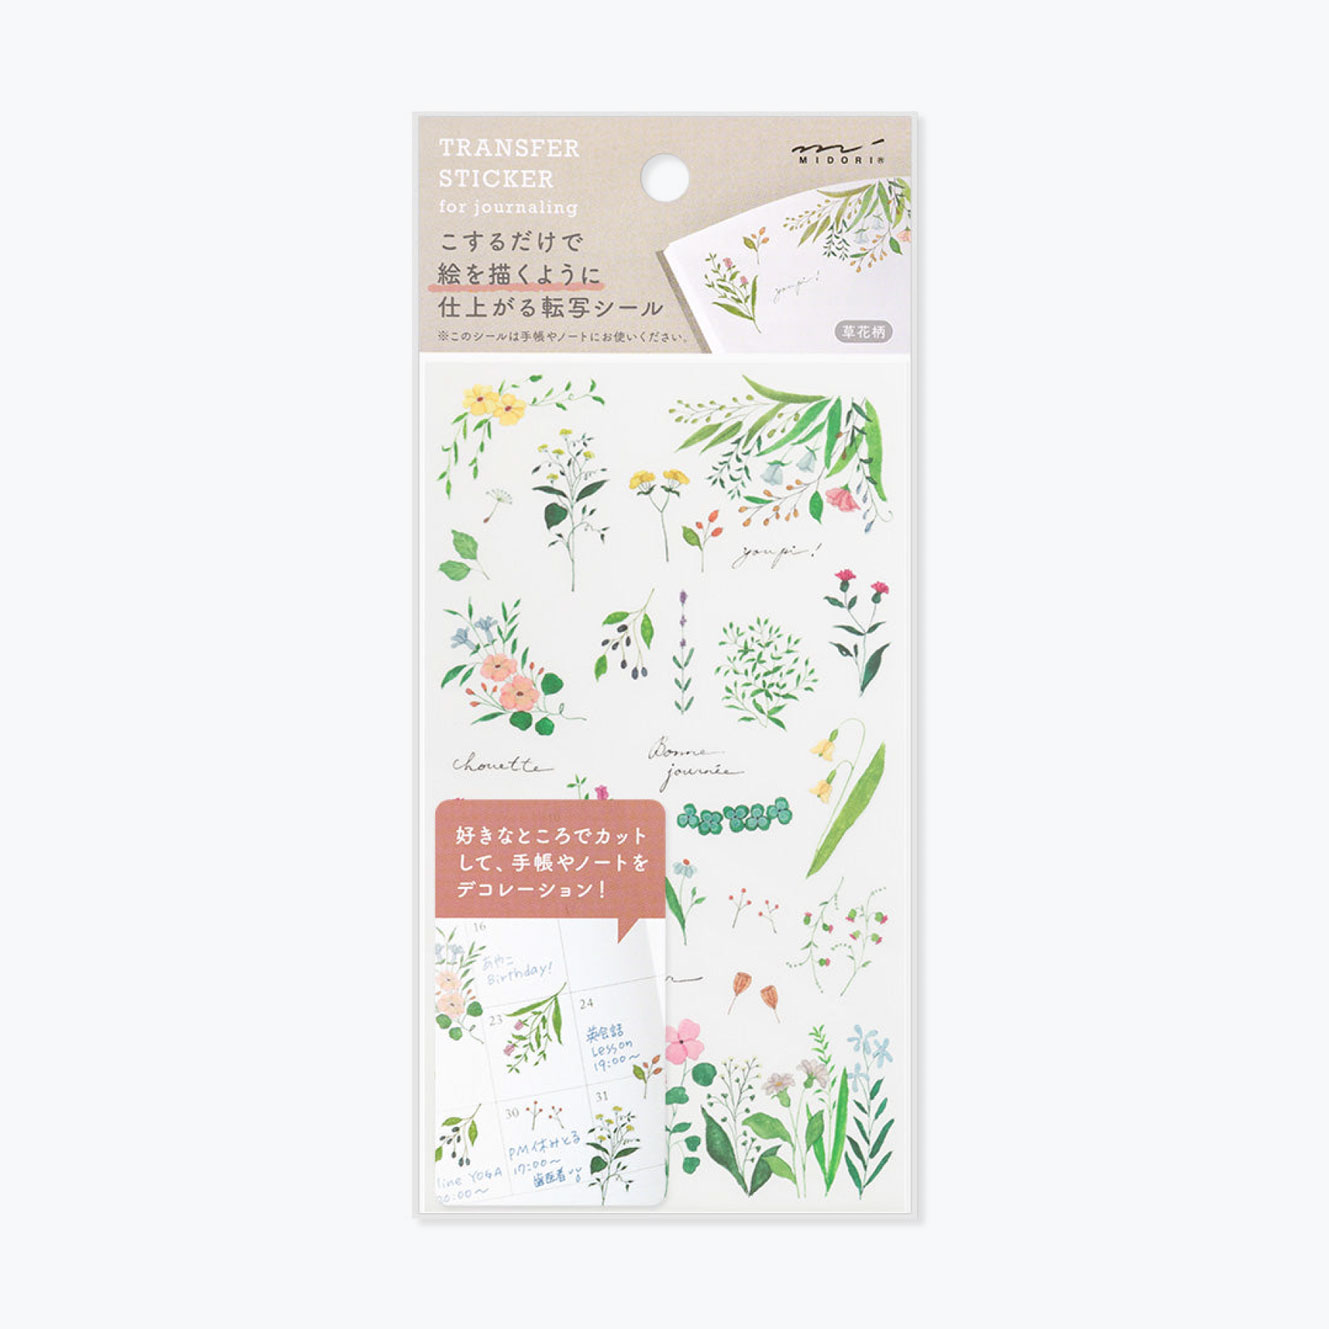 Midori - Sticker Seal - Transfer - Flowers